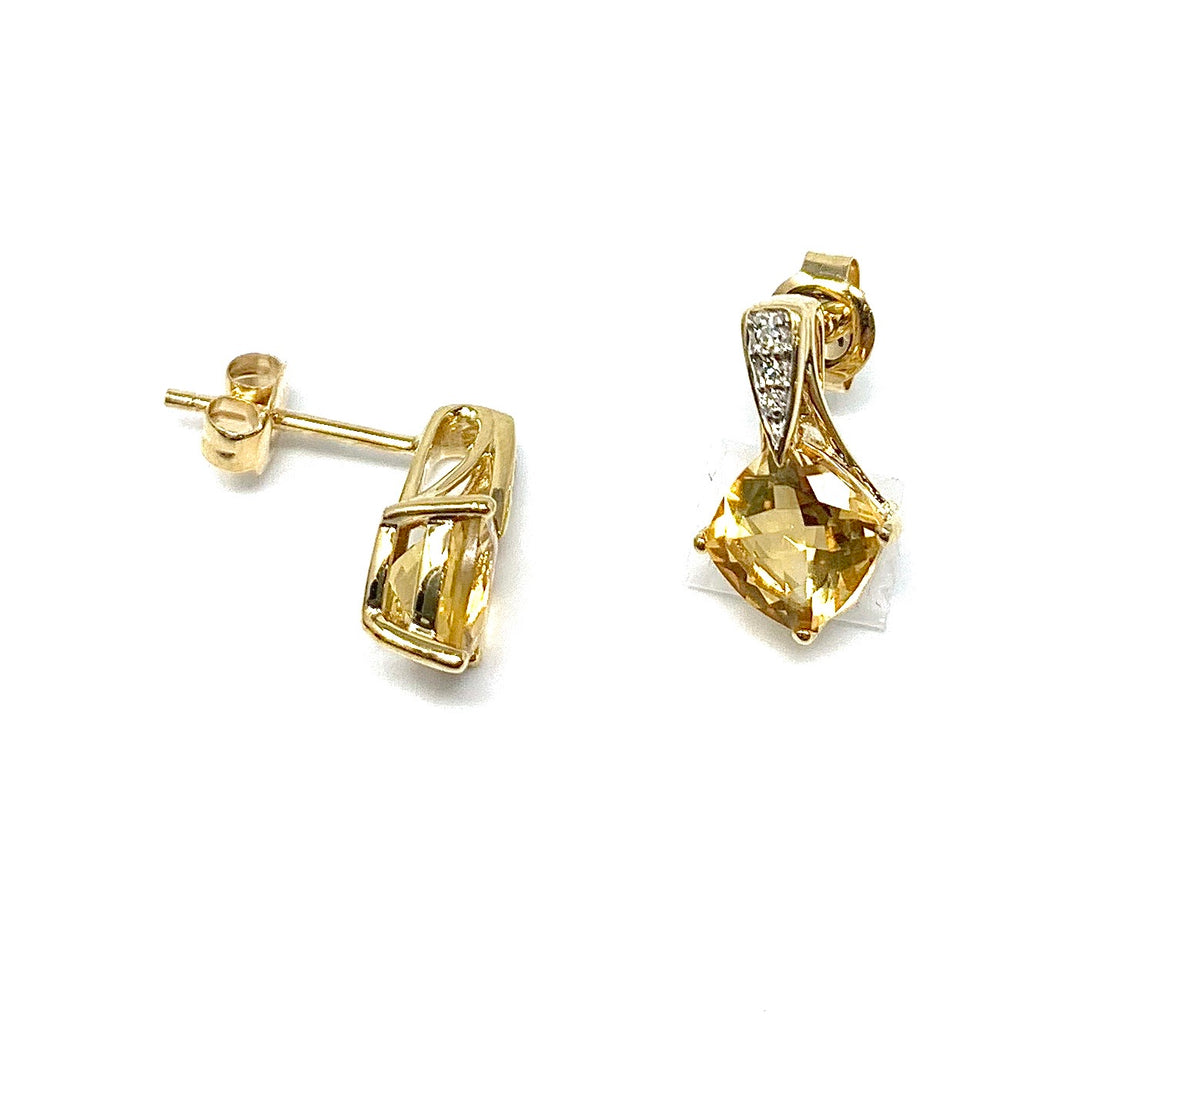 10K Yellow Gold 1.00cttw Genuine Citrine &amp; 0.026cttw Diamond Earrings